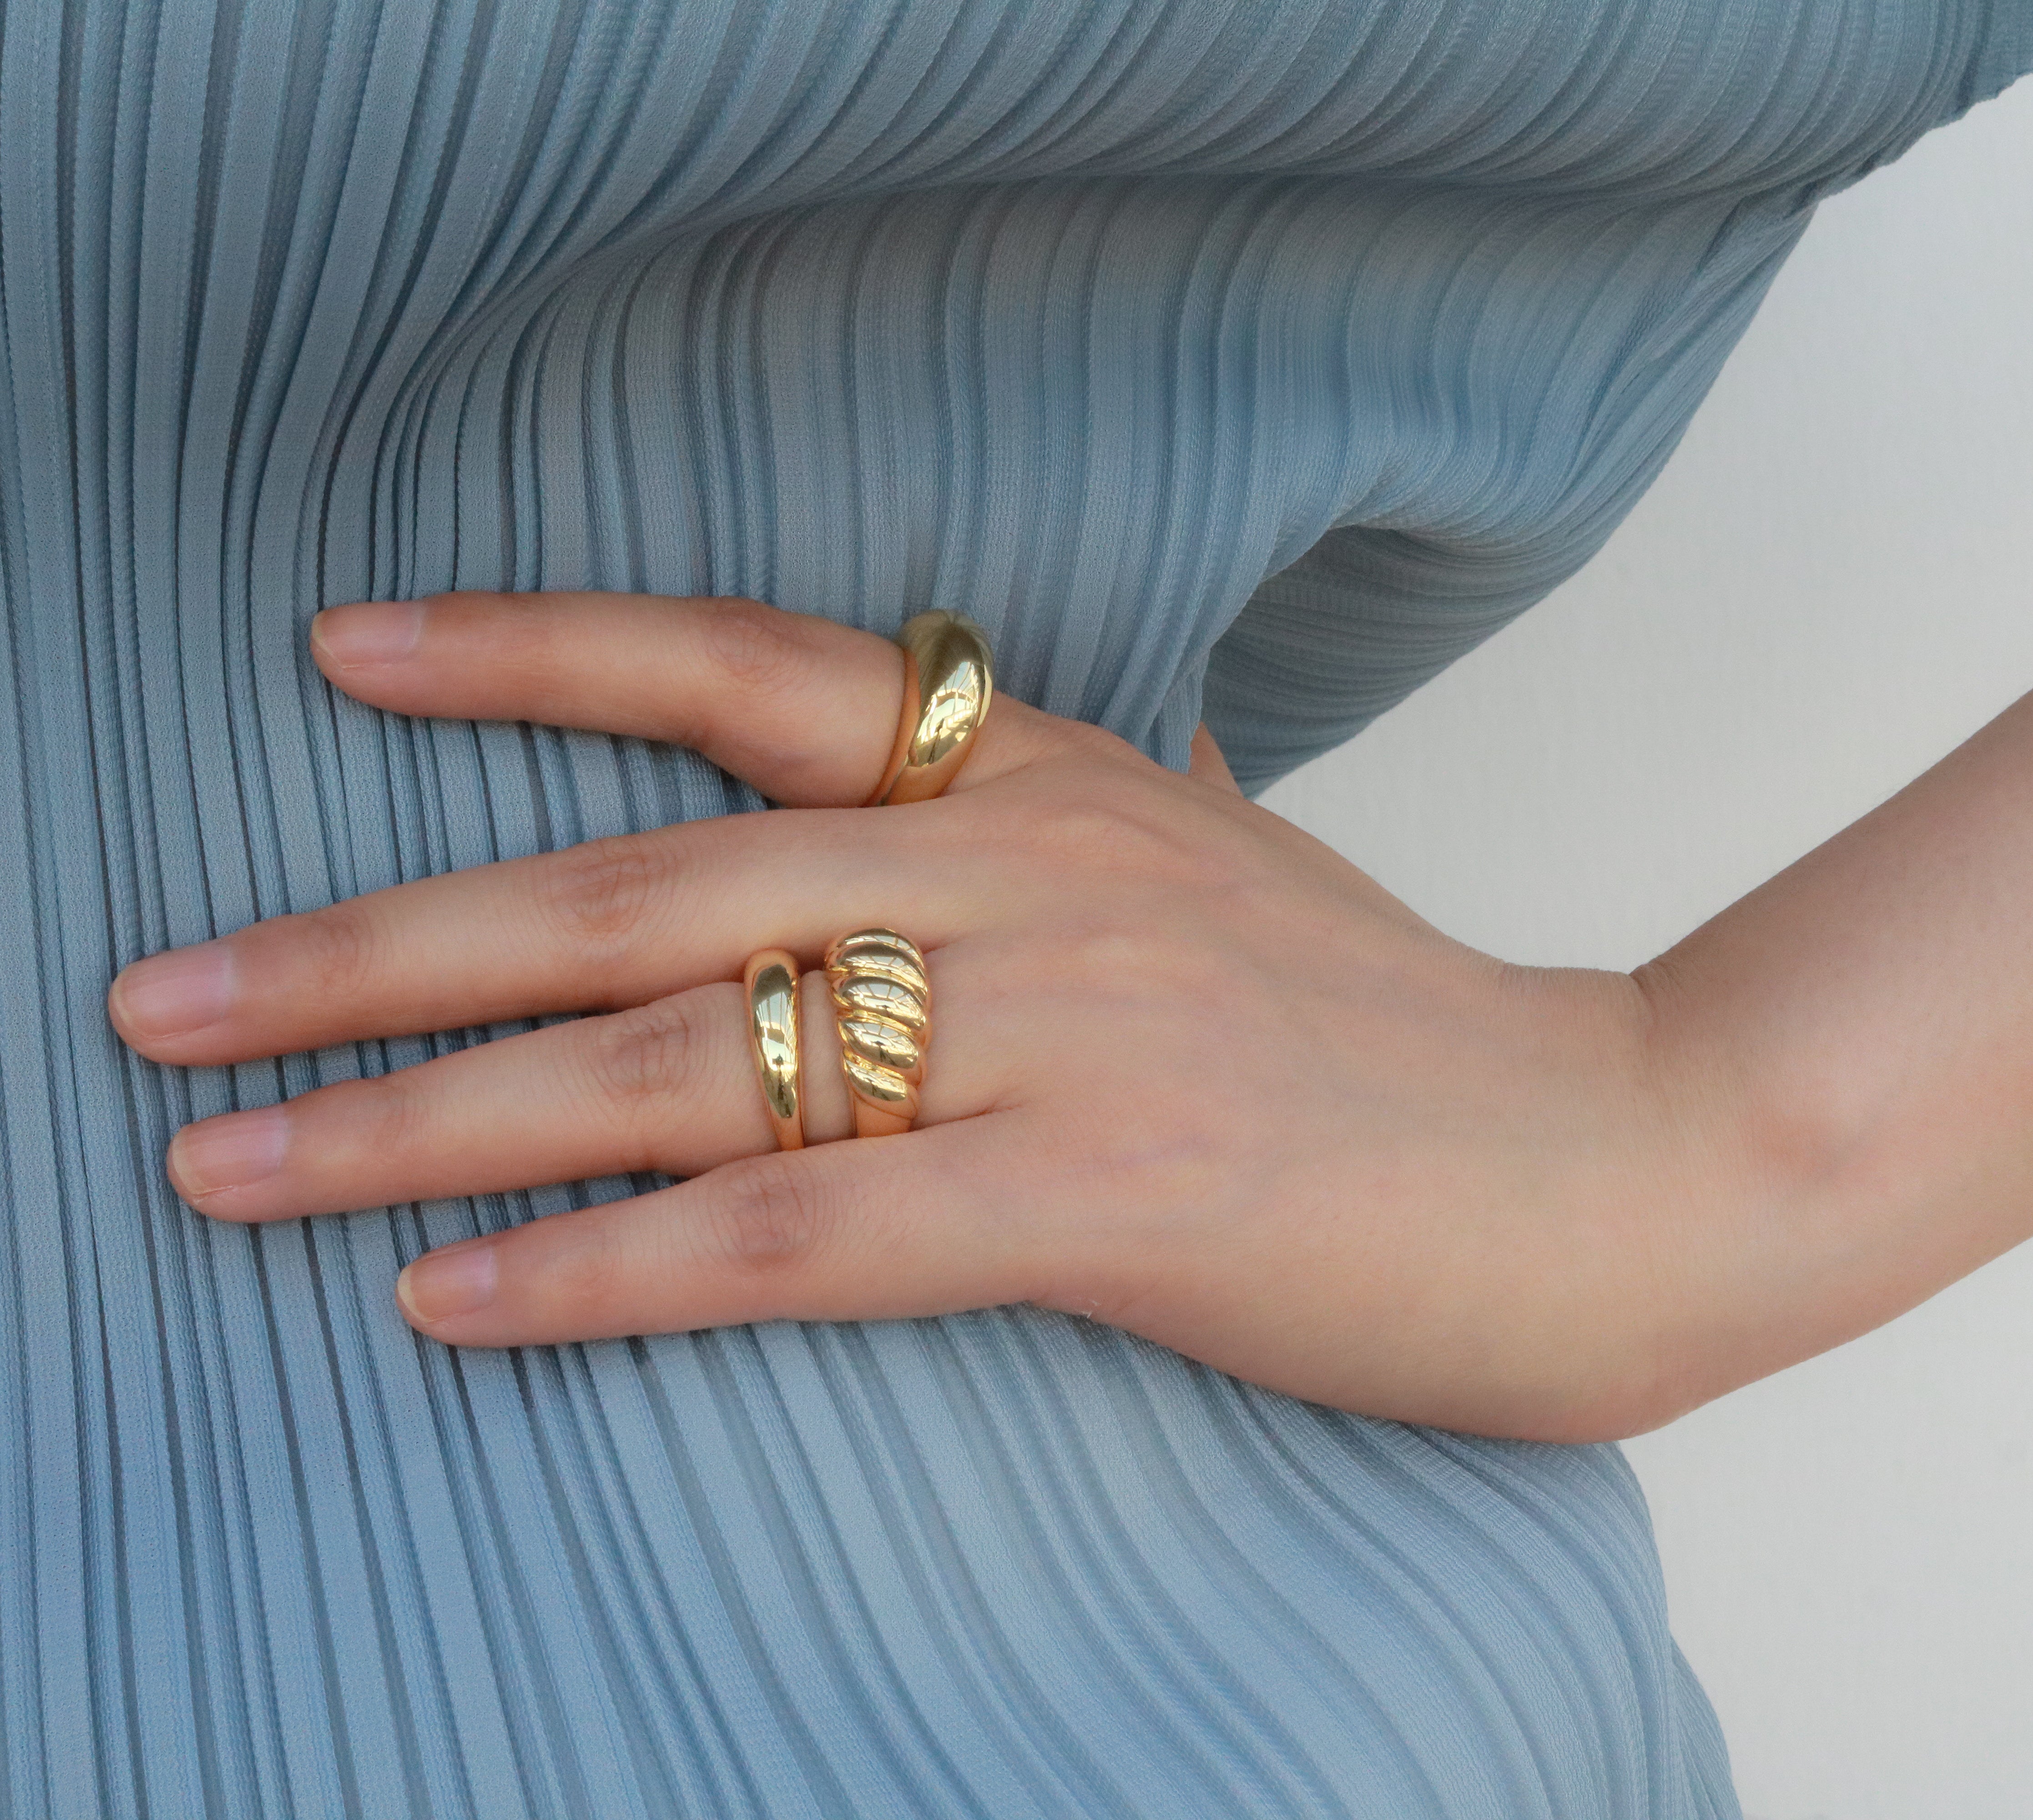 Meideya Jewelry - The mia ring in 18k gold vermeil